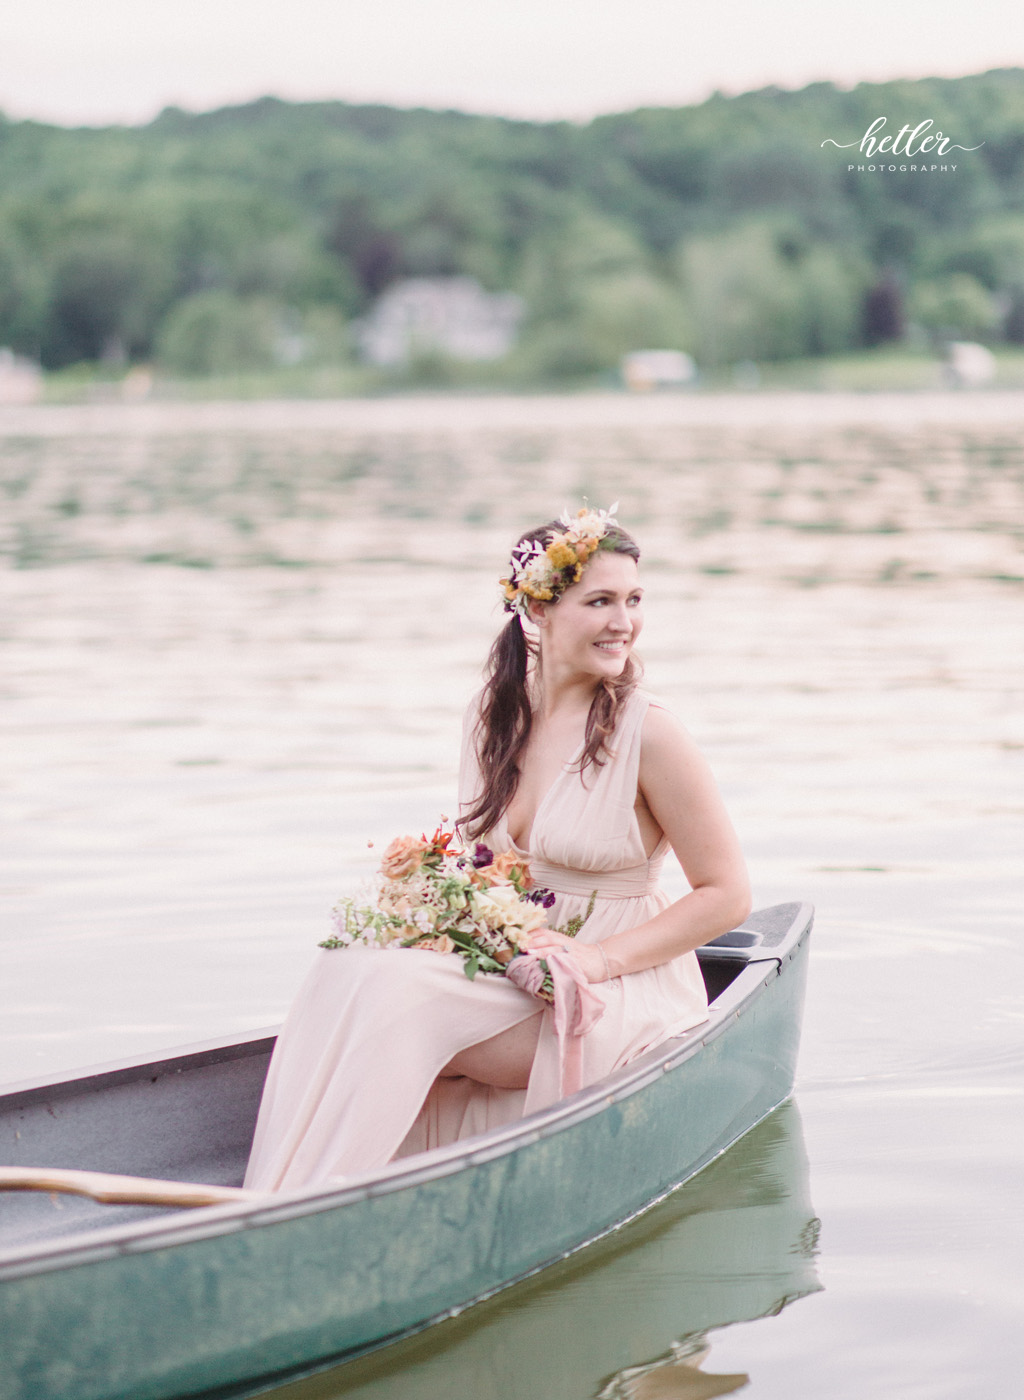 Northern MIchigan lakeside wedding inspiration boho picnic theme in canoe